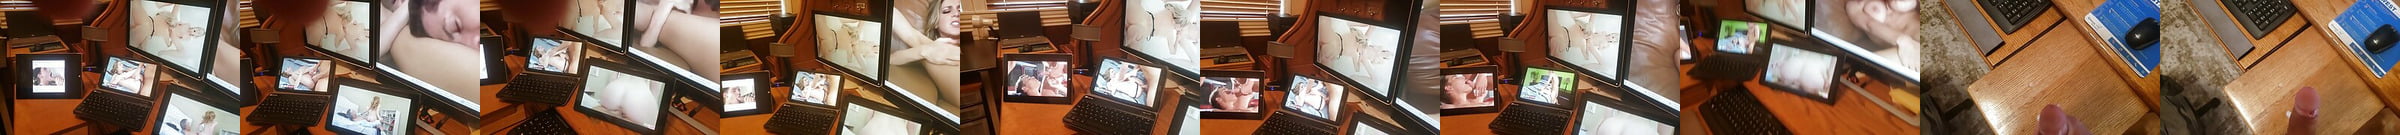 Sex Shop Video Booth Stroke Nice Cum Shot Free Gay Porn